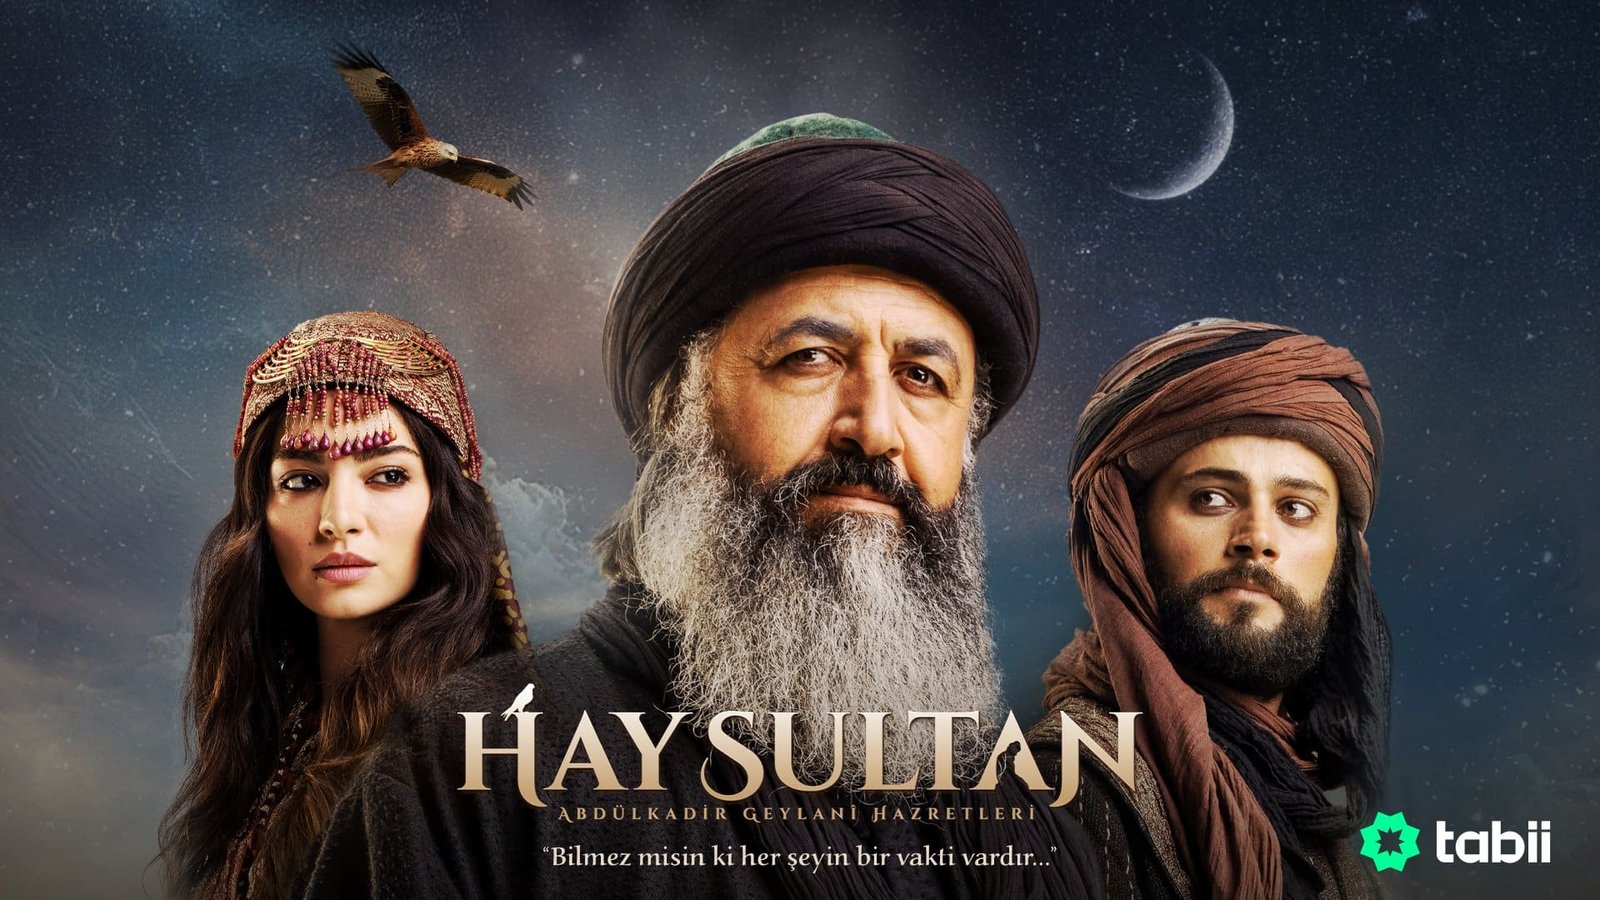 Hay Sultan Abdulkadir Geylani Episode 7 English Subtitles